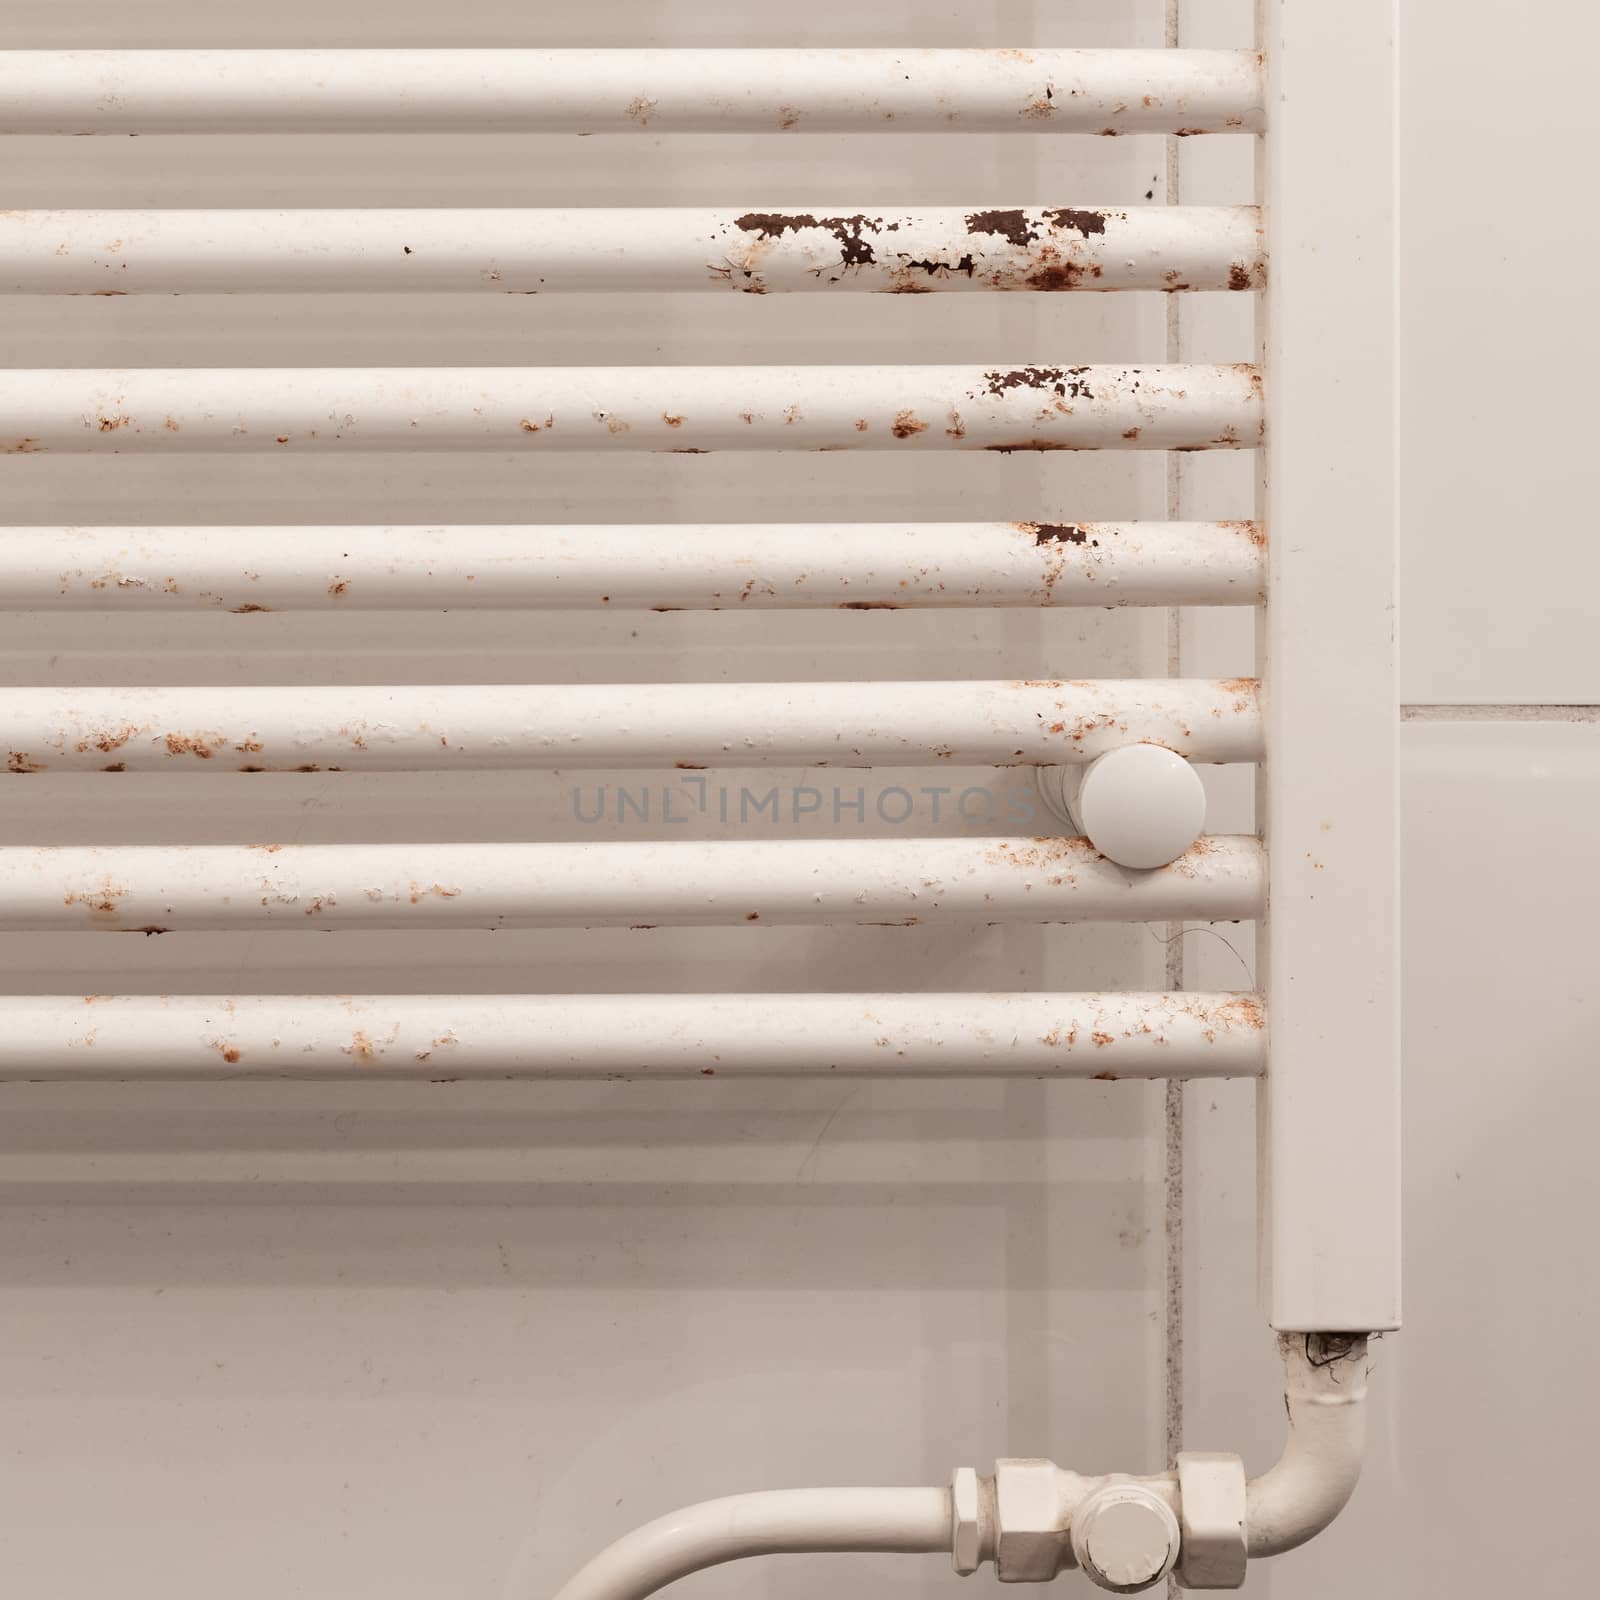 Rusty household cast iron radiator by michaklootwijk